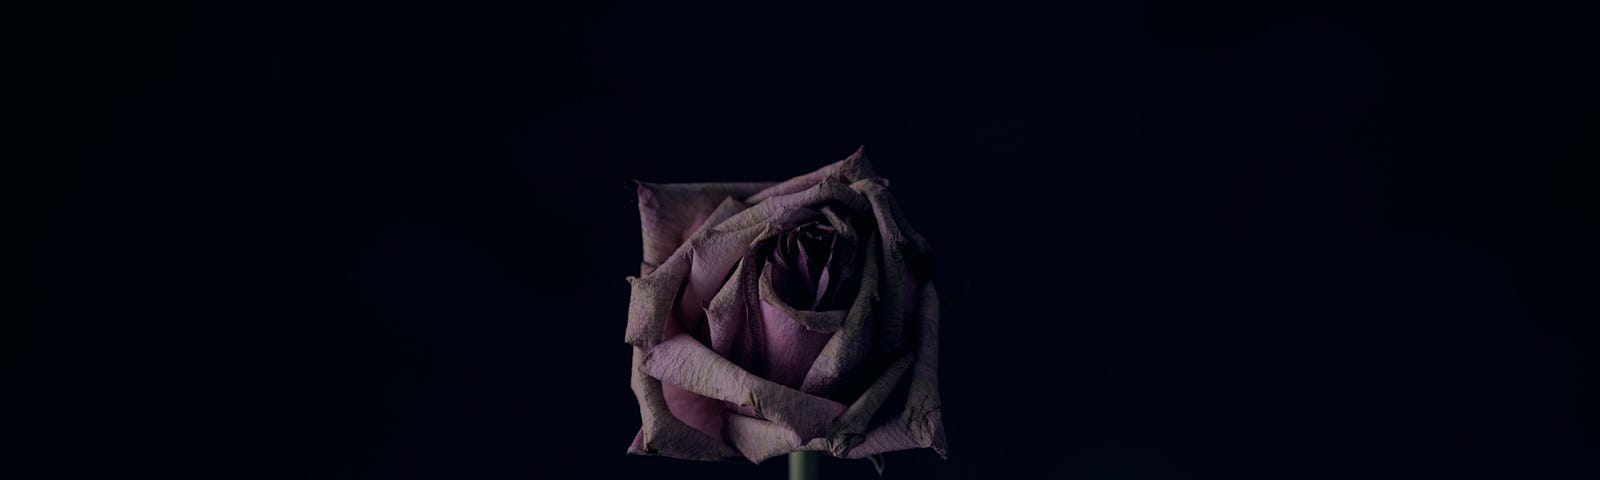 Dark purple rose against a black background